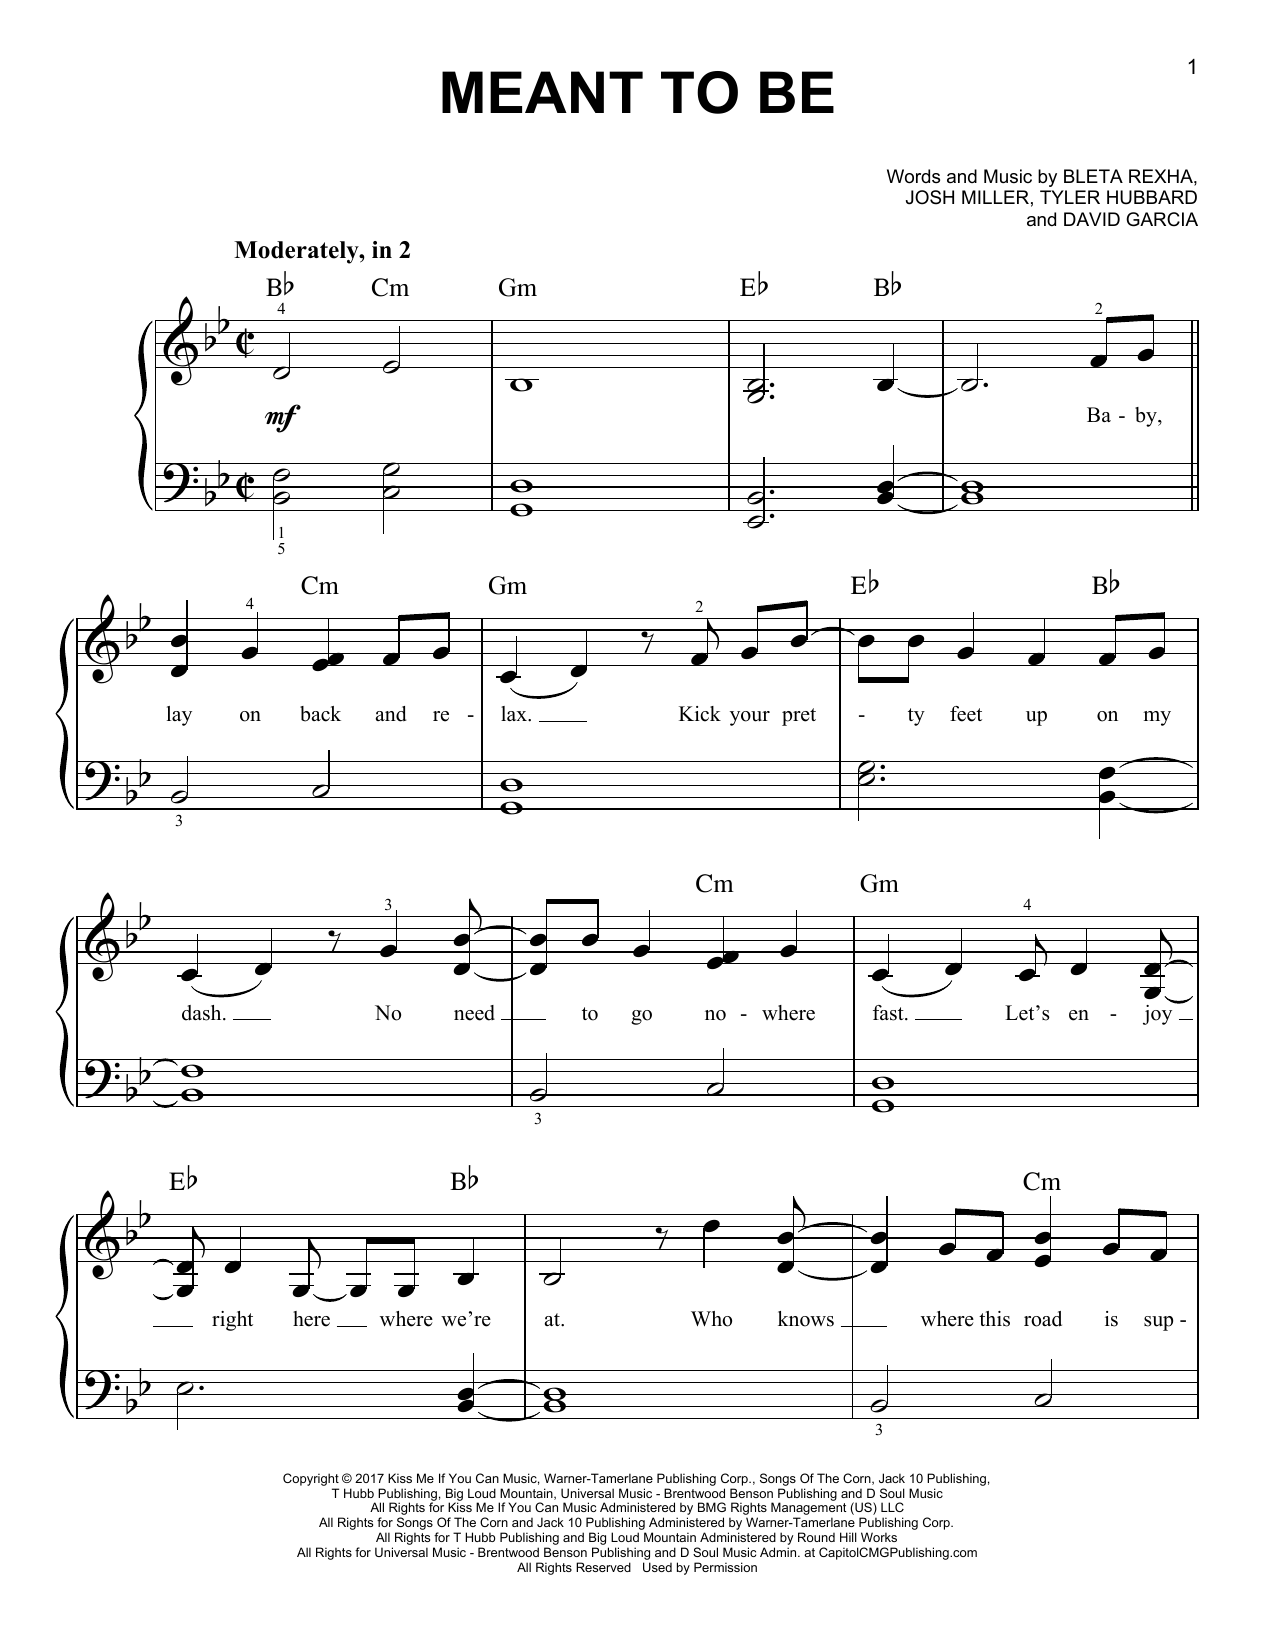 Bebe Rexha "Meant Be (feat. Florida Georgia Line)" Sheet Music Notes | Download Printable PDF Score 255274